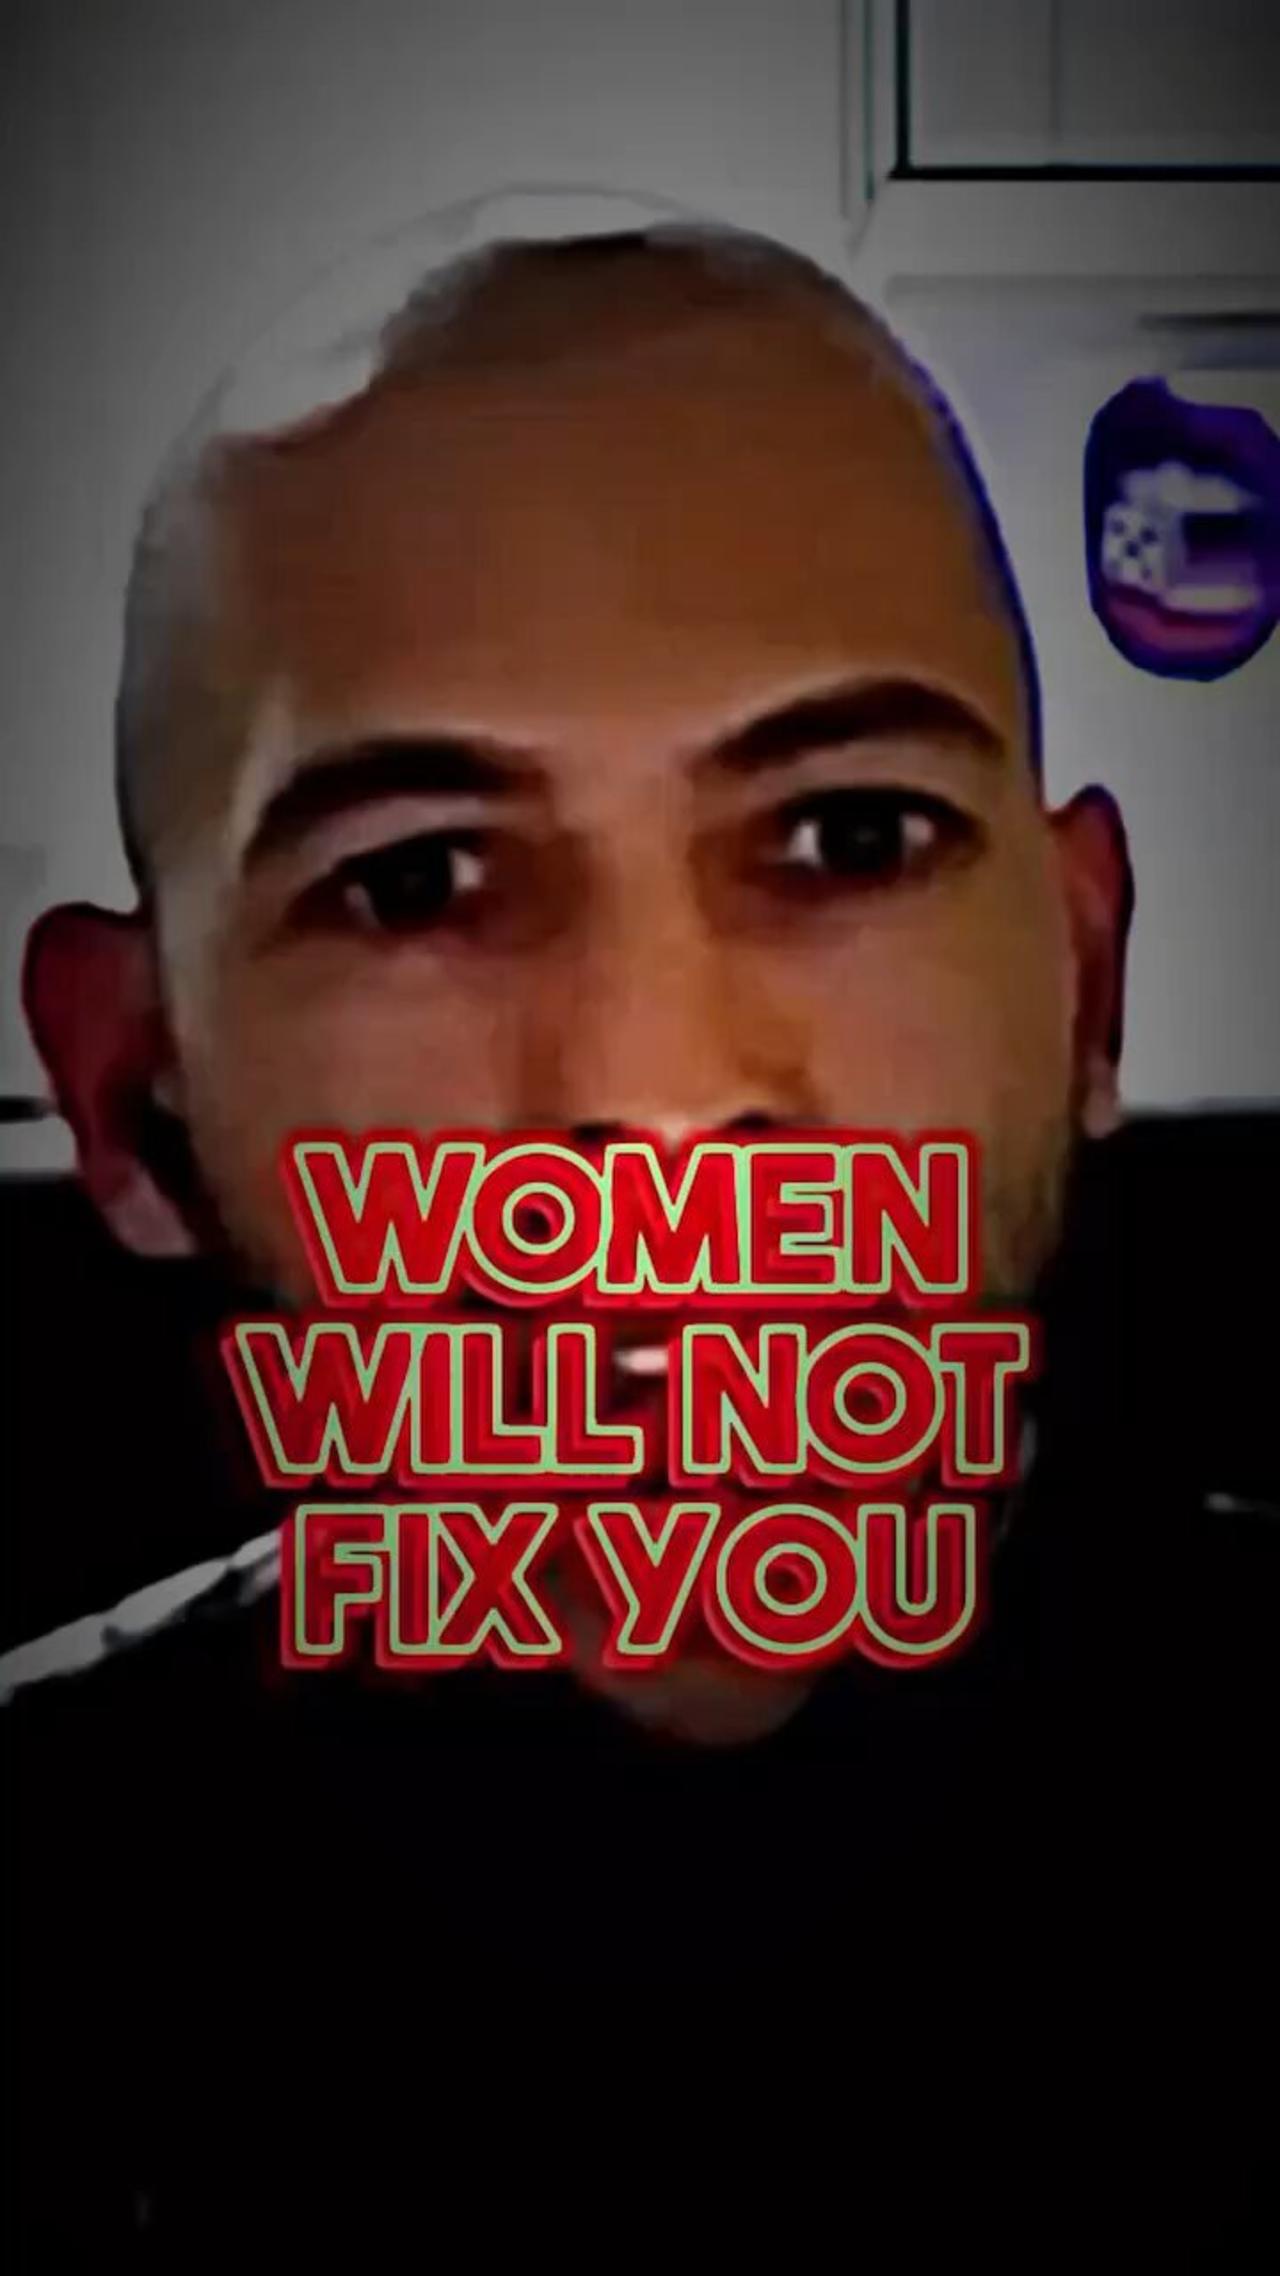 WOMEN WILL NOT FIX YOU